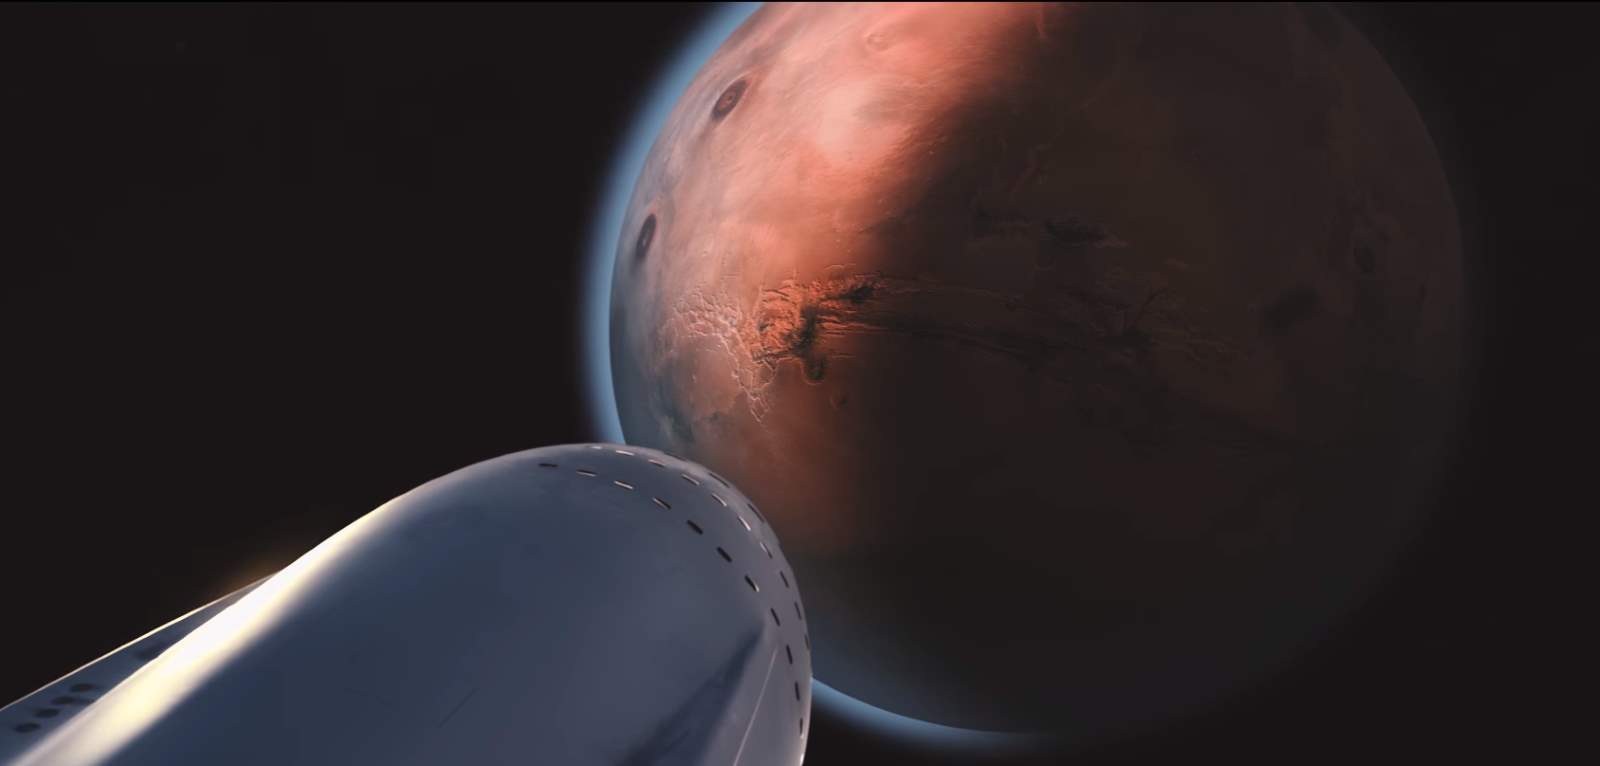 Interplanetary Transport System - Spaceship Close to Mars